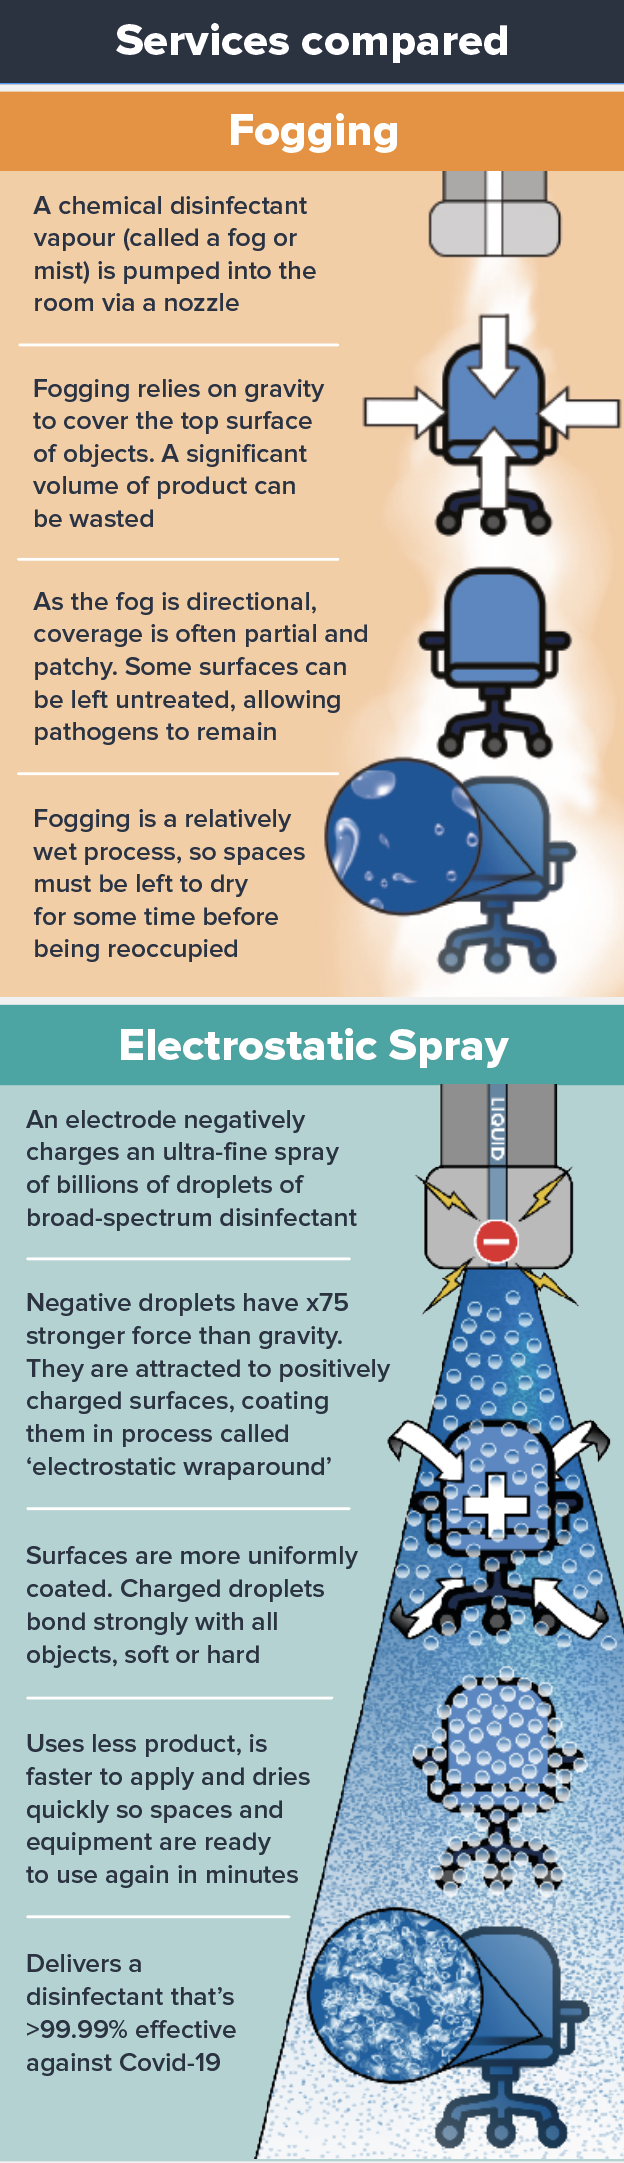 Services compared - fogging vs electrostatic spray - safegroup